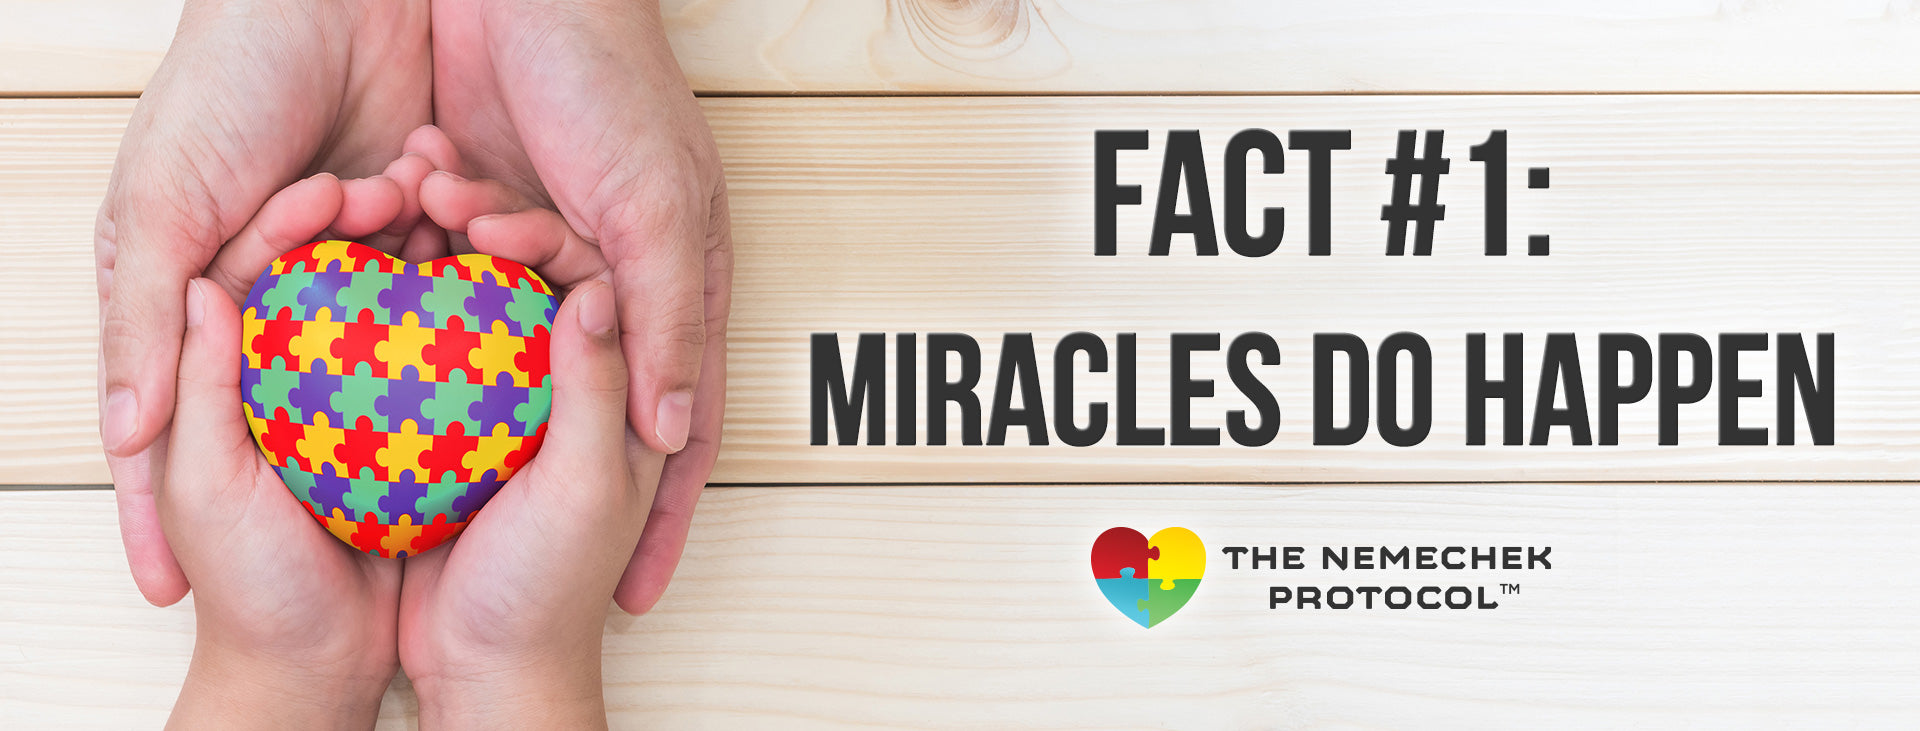 fact #1: miracles do happen - Nemechek Protocol